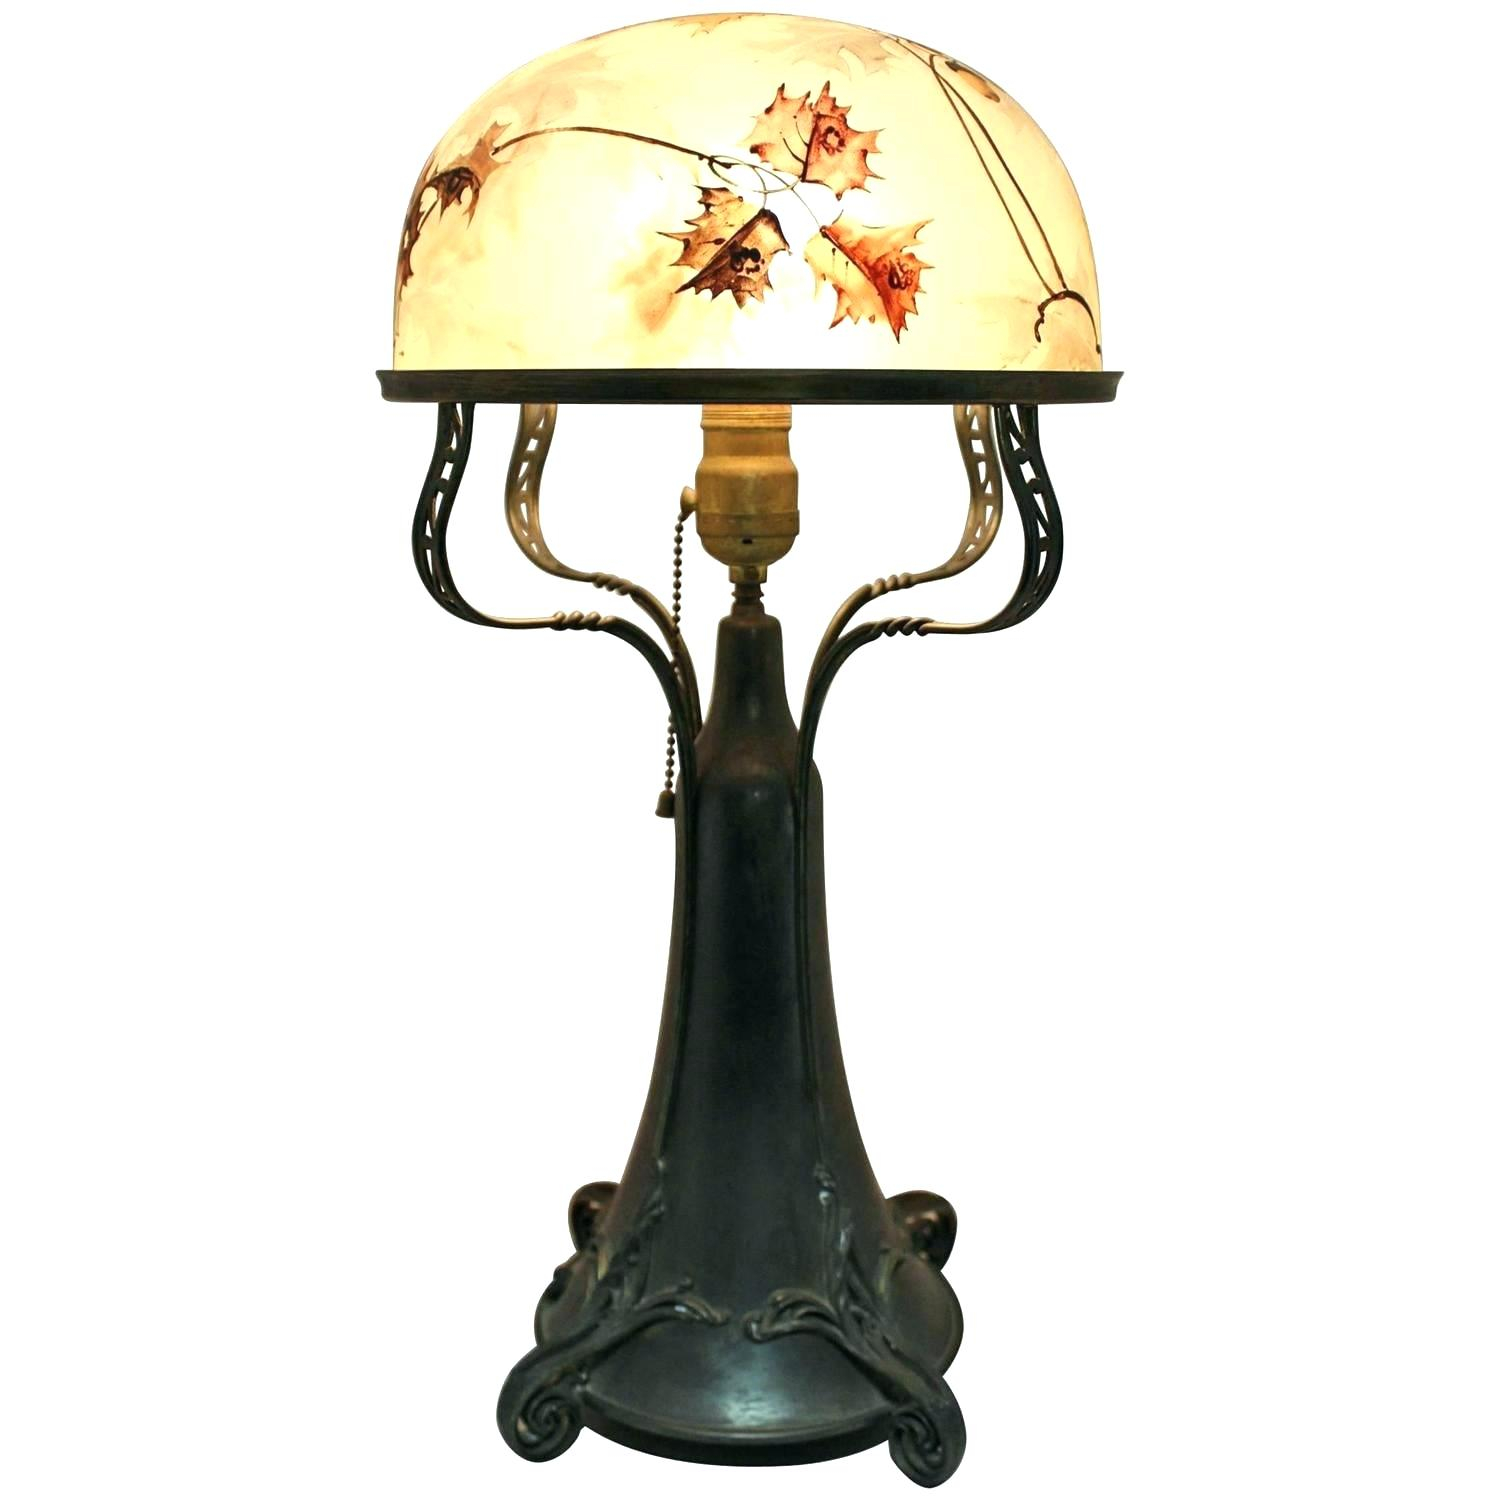 Chandelier Globe Lighting Antique Lamp Shades Drum Floor within dimensions 1500 X 1500